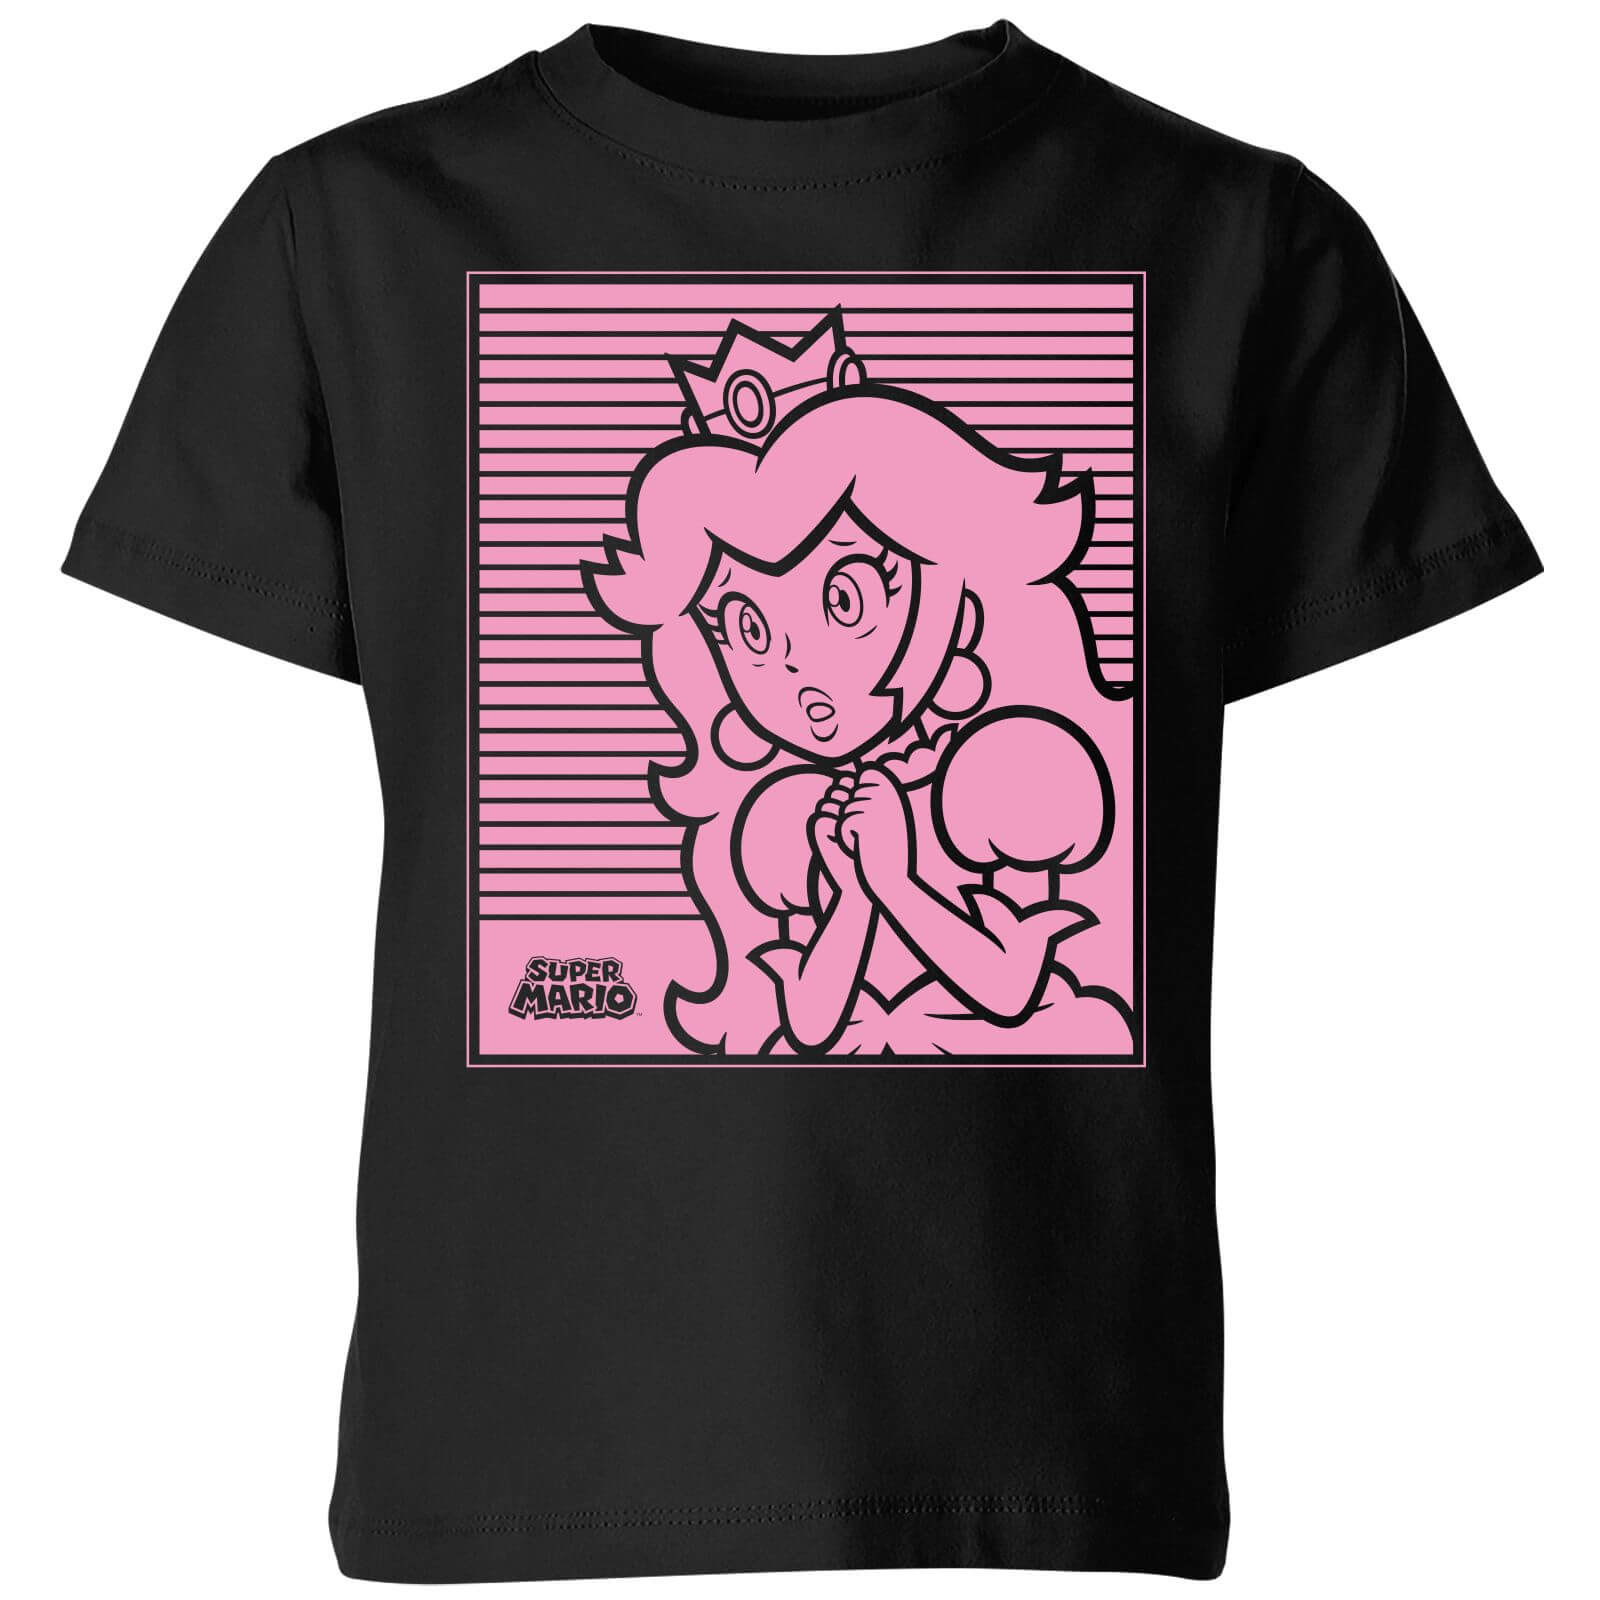 Nintendo Super Mario Princess Peach Retro Line Art Kid's T-Shirt - Black - 3-4 Years - Black